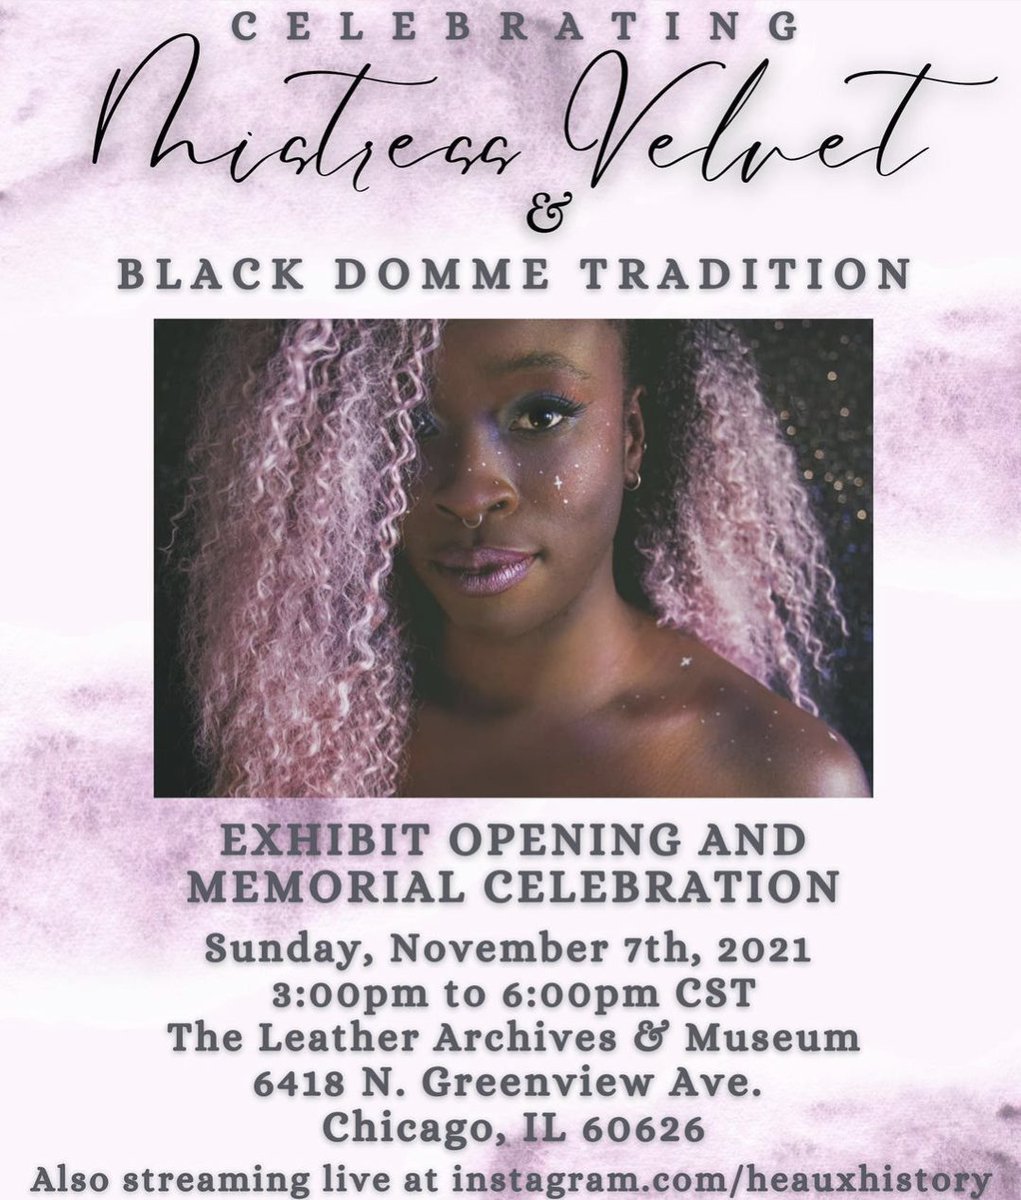 Celebrating Mistress Velvet & Black Domme Tradition, Nov 7, 3-6pm, at @leatherarchives, by @HeauxHistory